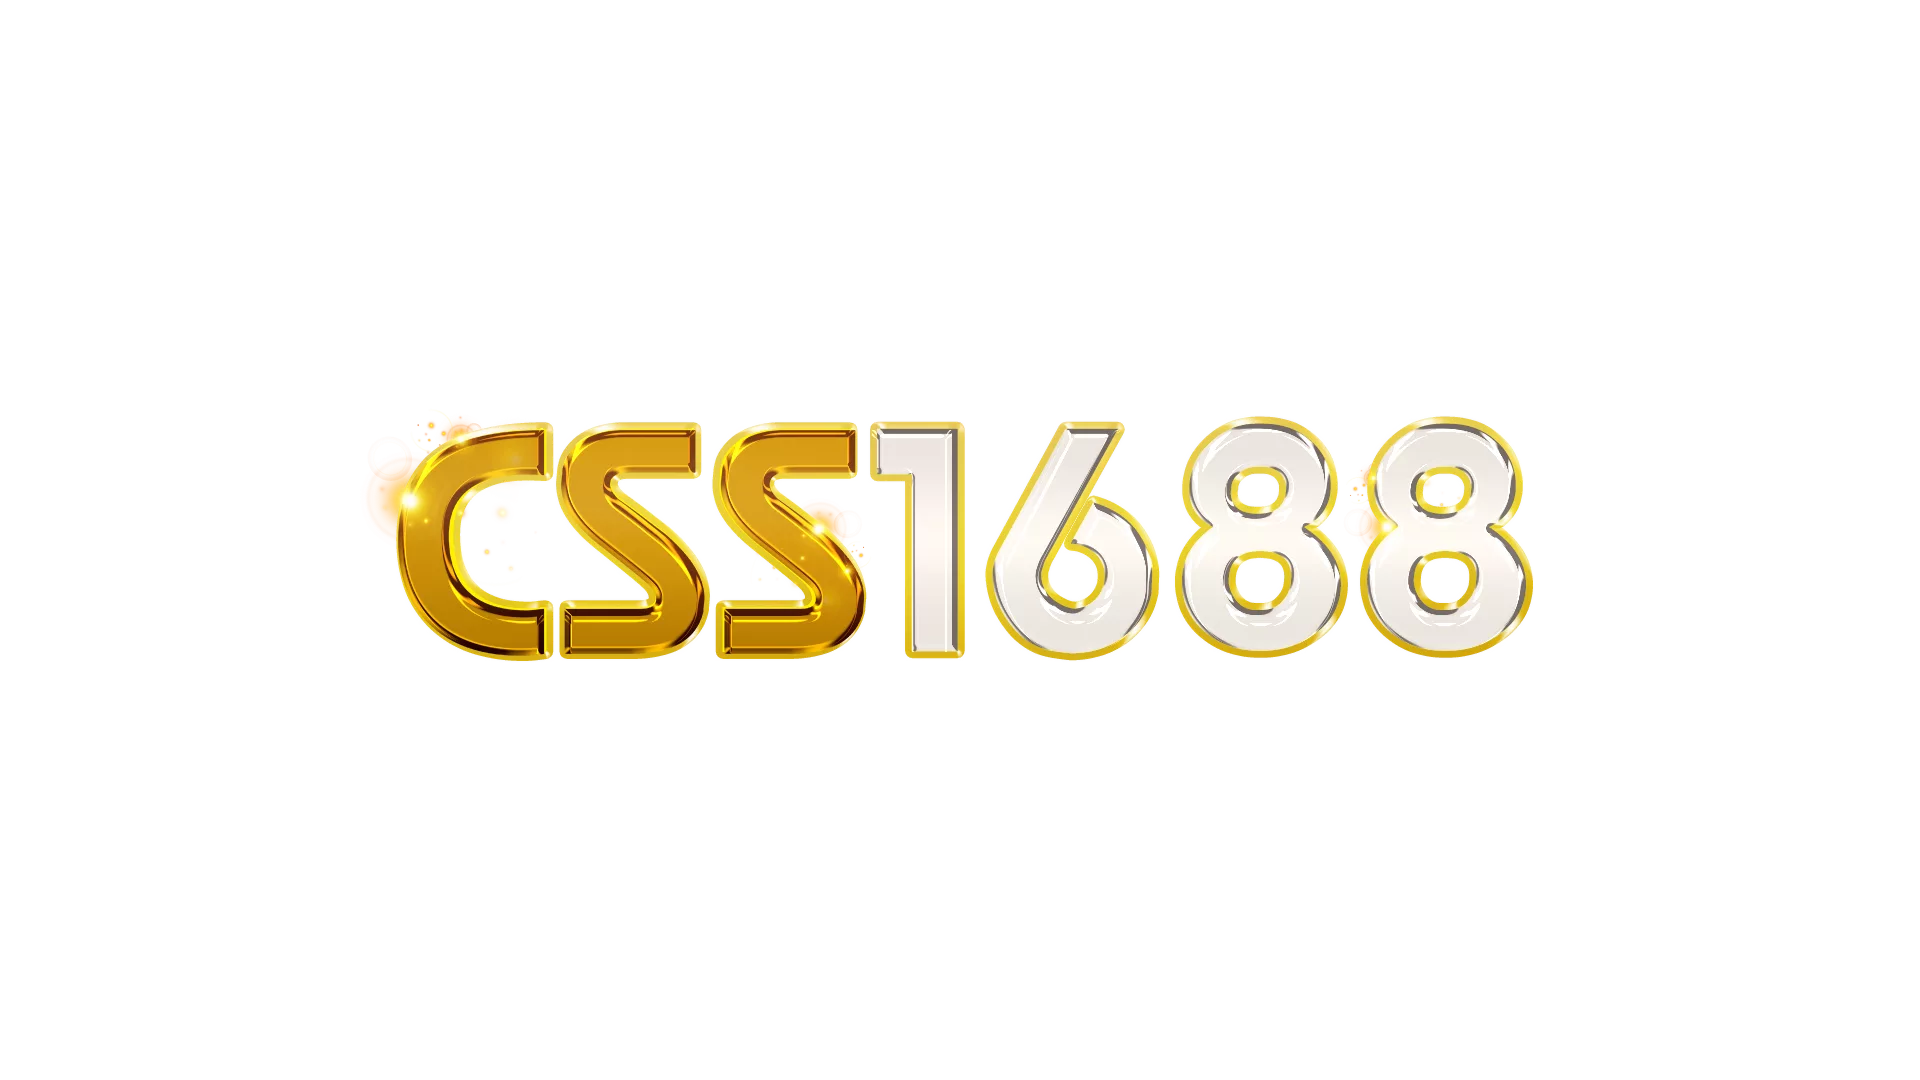 css-logo-3